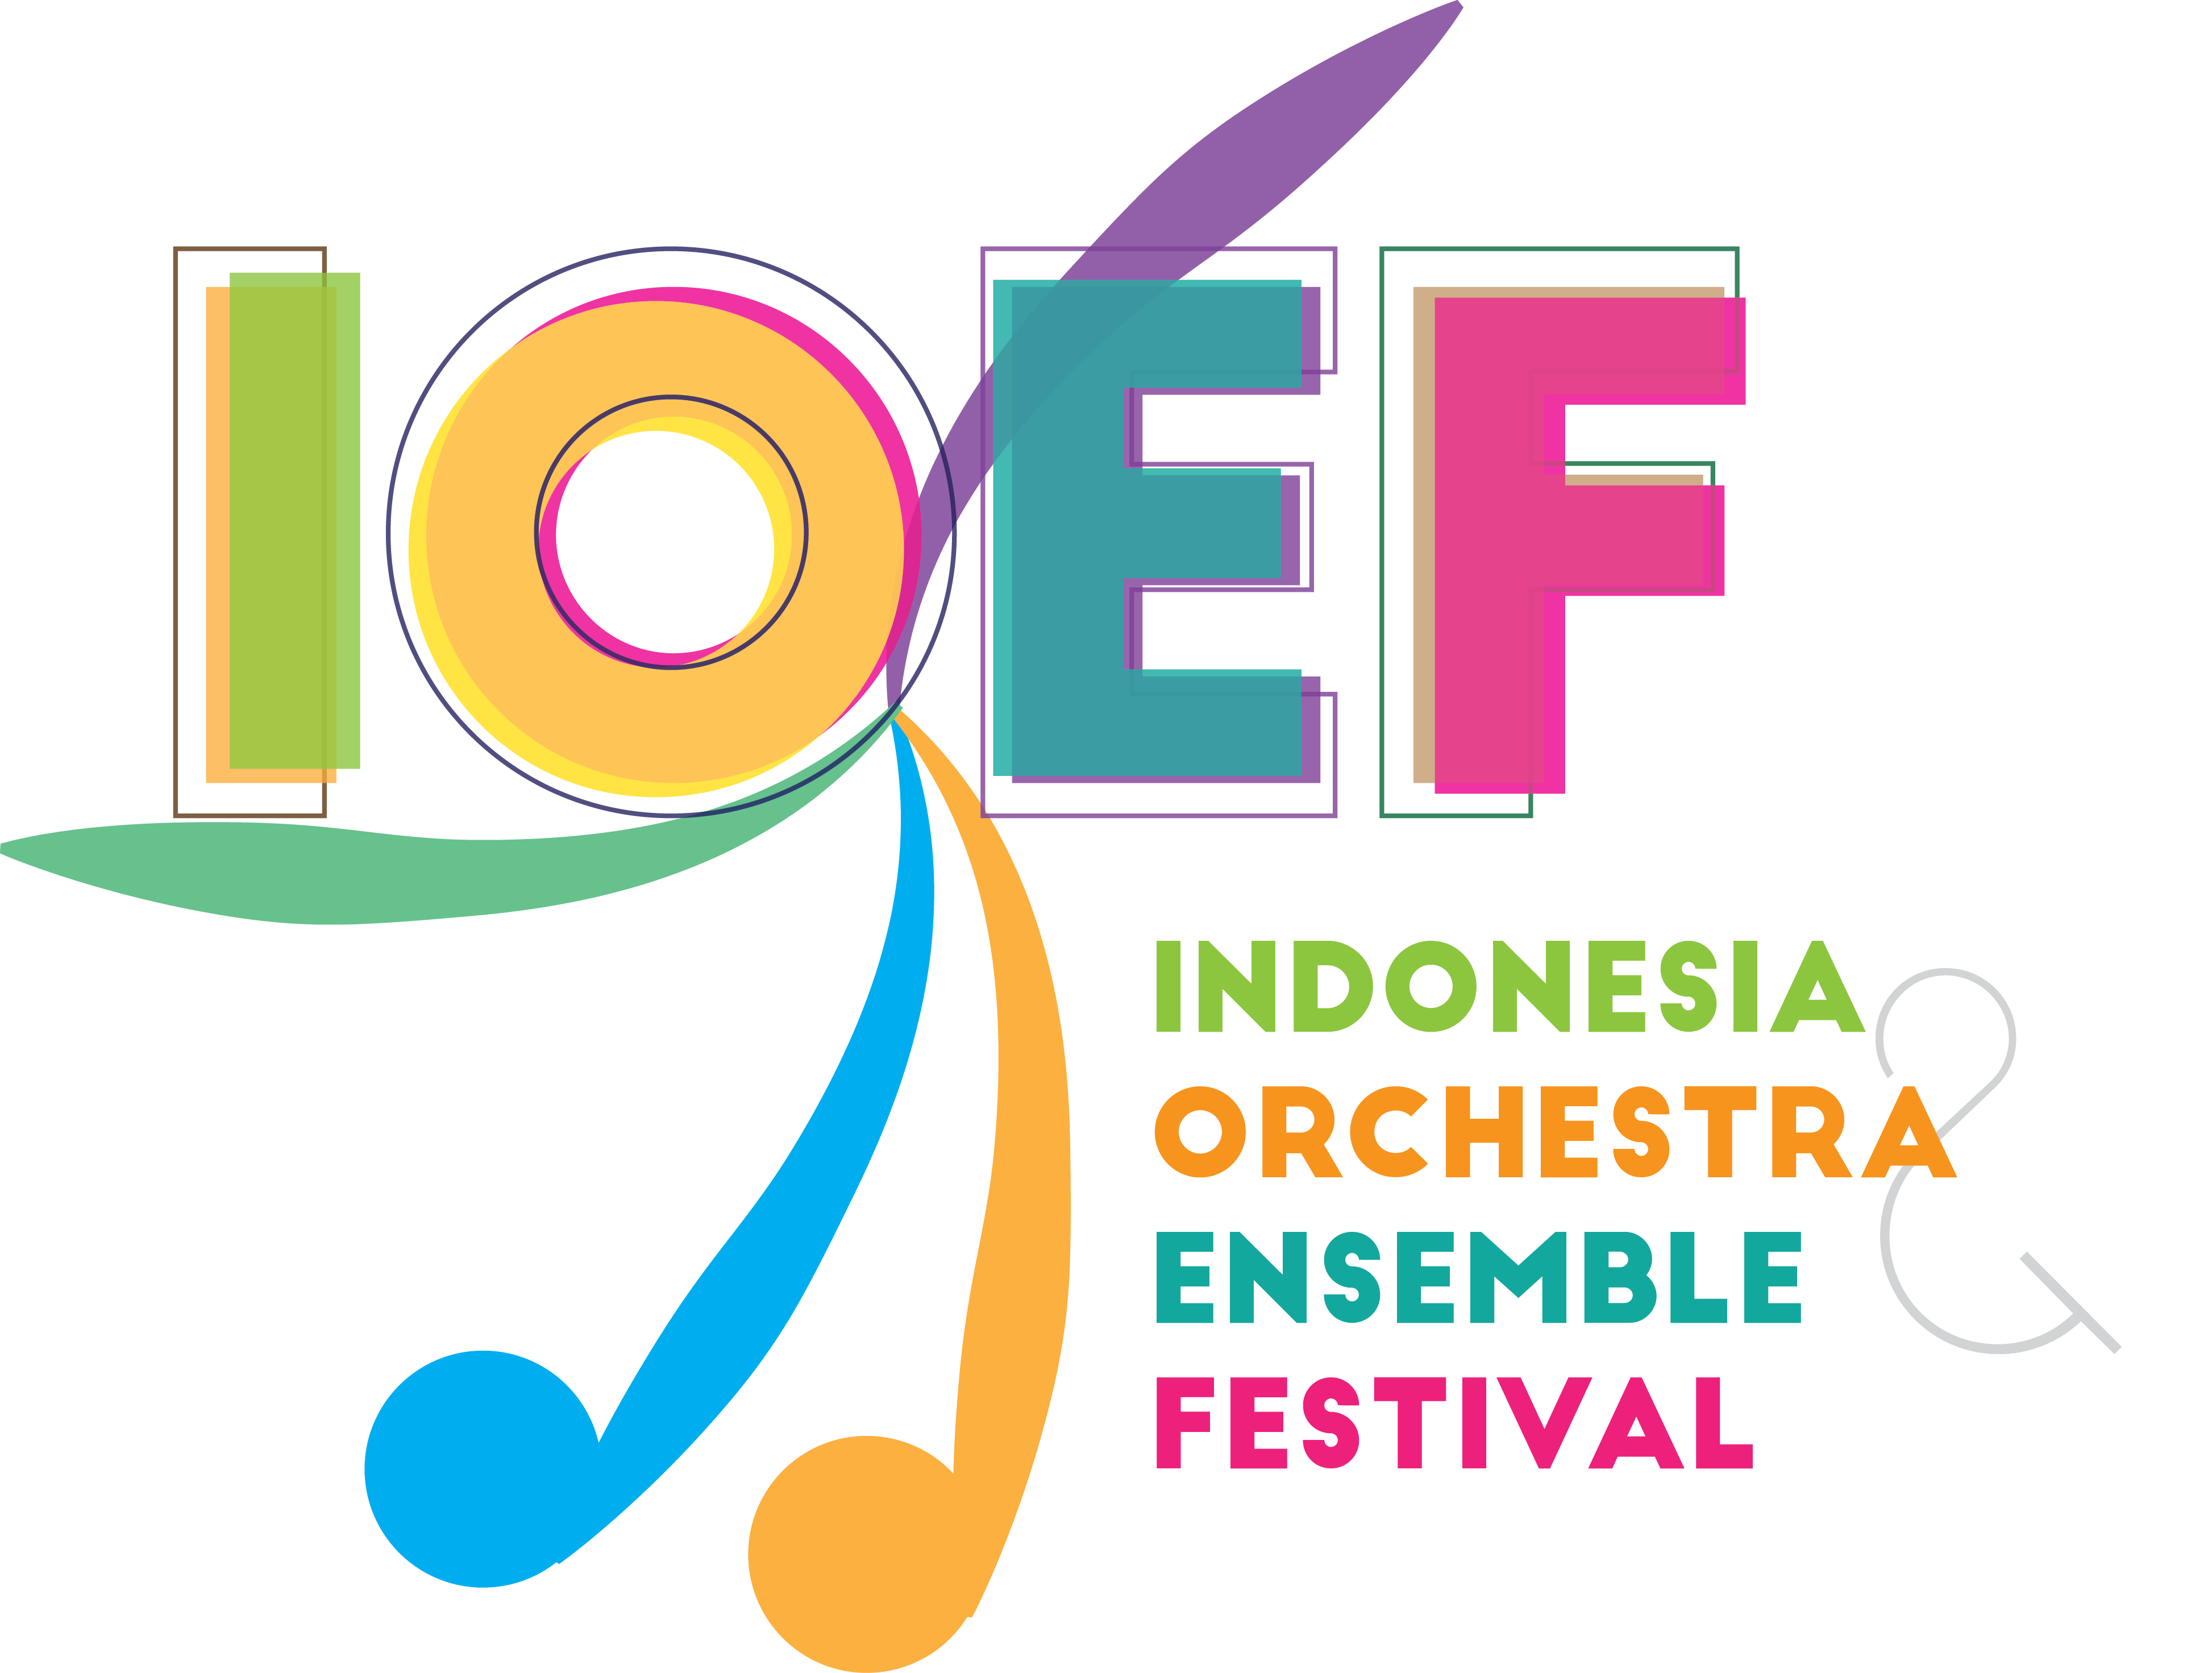 Indonesia Orchestra & Ensemble F